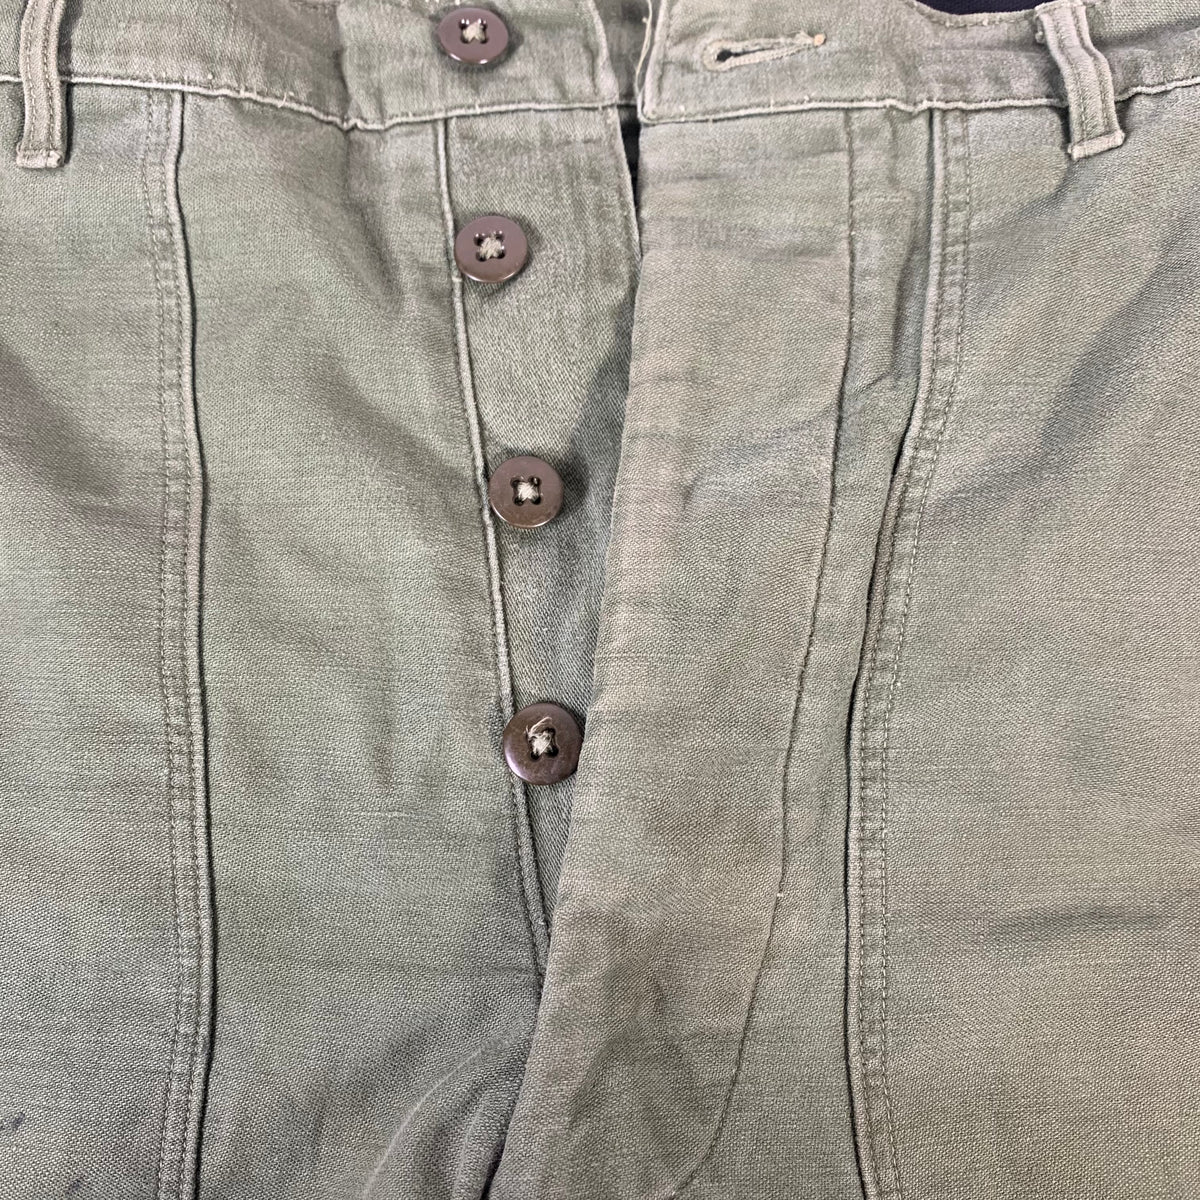 Vintage US Army Sateen &quot;OG-107&quot; Cotton Trousers 31x30